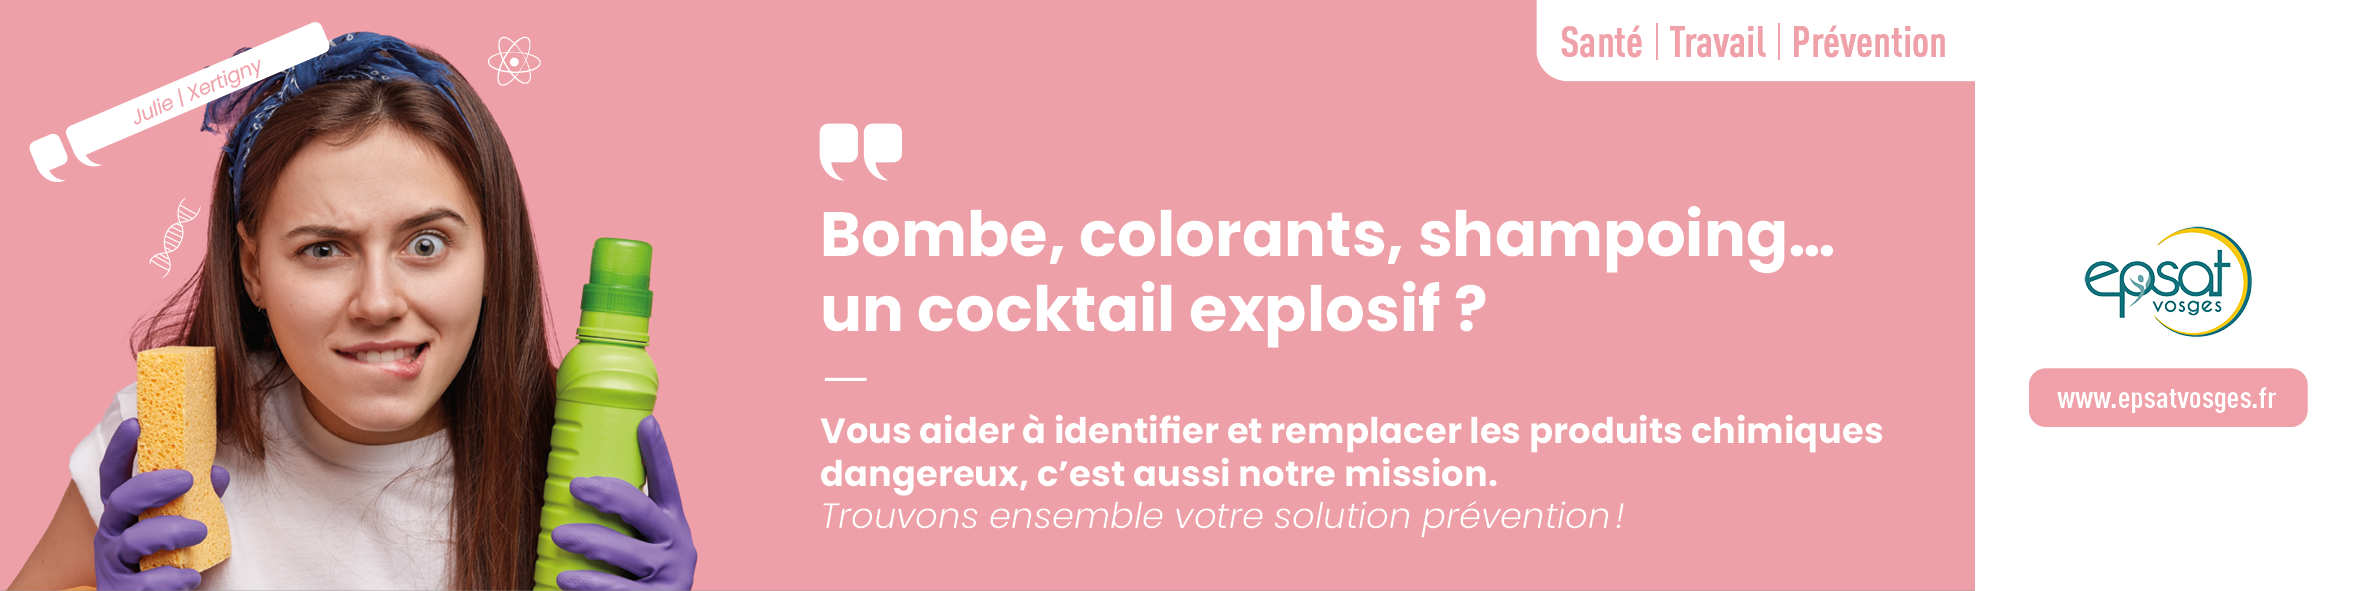 Image de Bombe, colorants, shampoing…un cocktail explosif ?